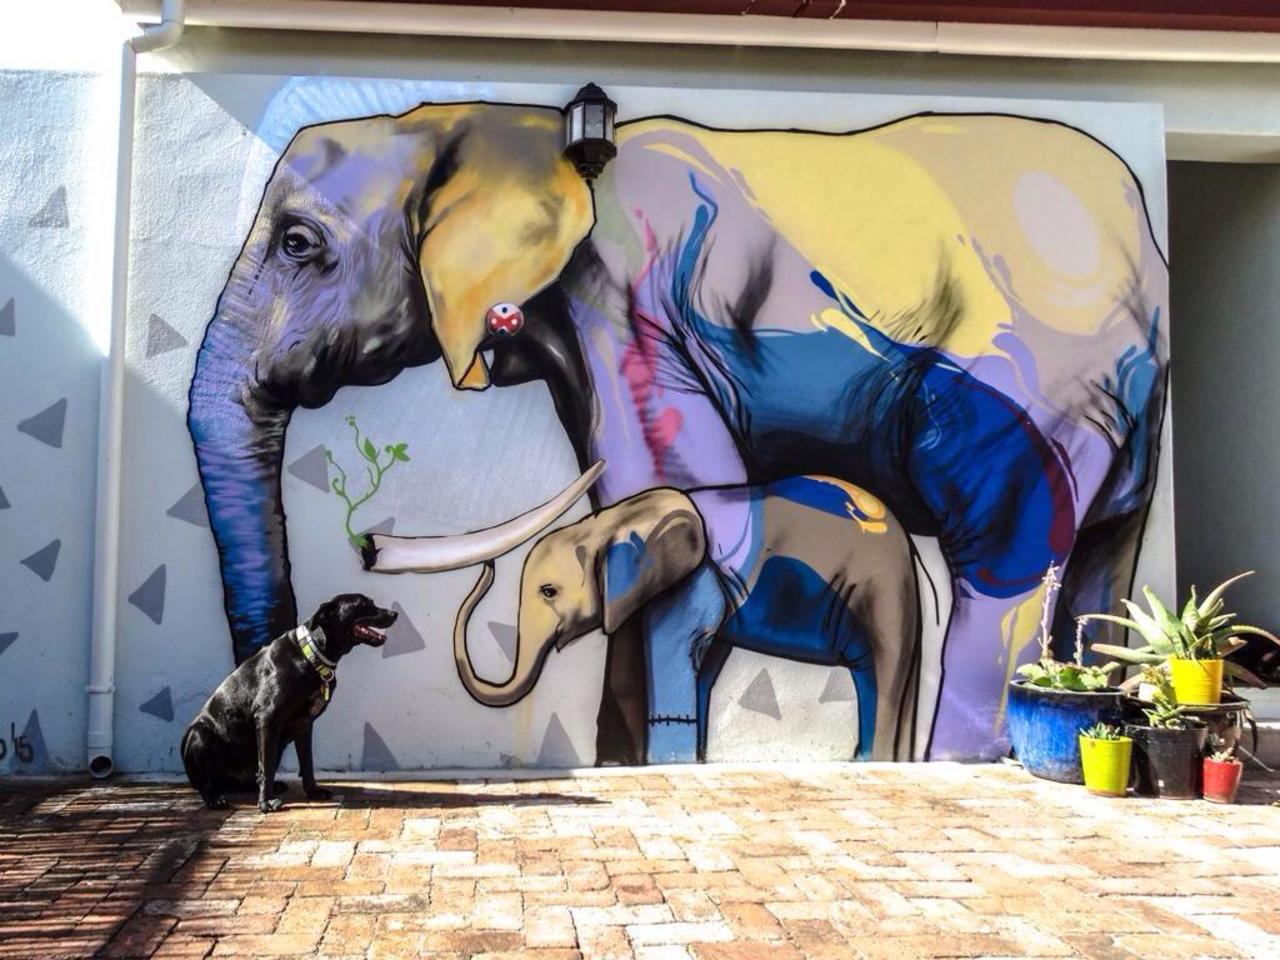 Latest nature in Street Art piece by Falko Paints In Cape Town

#art #mural #graffiti #streetart http://t.co/DSYd2CijNT